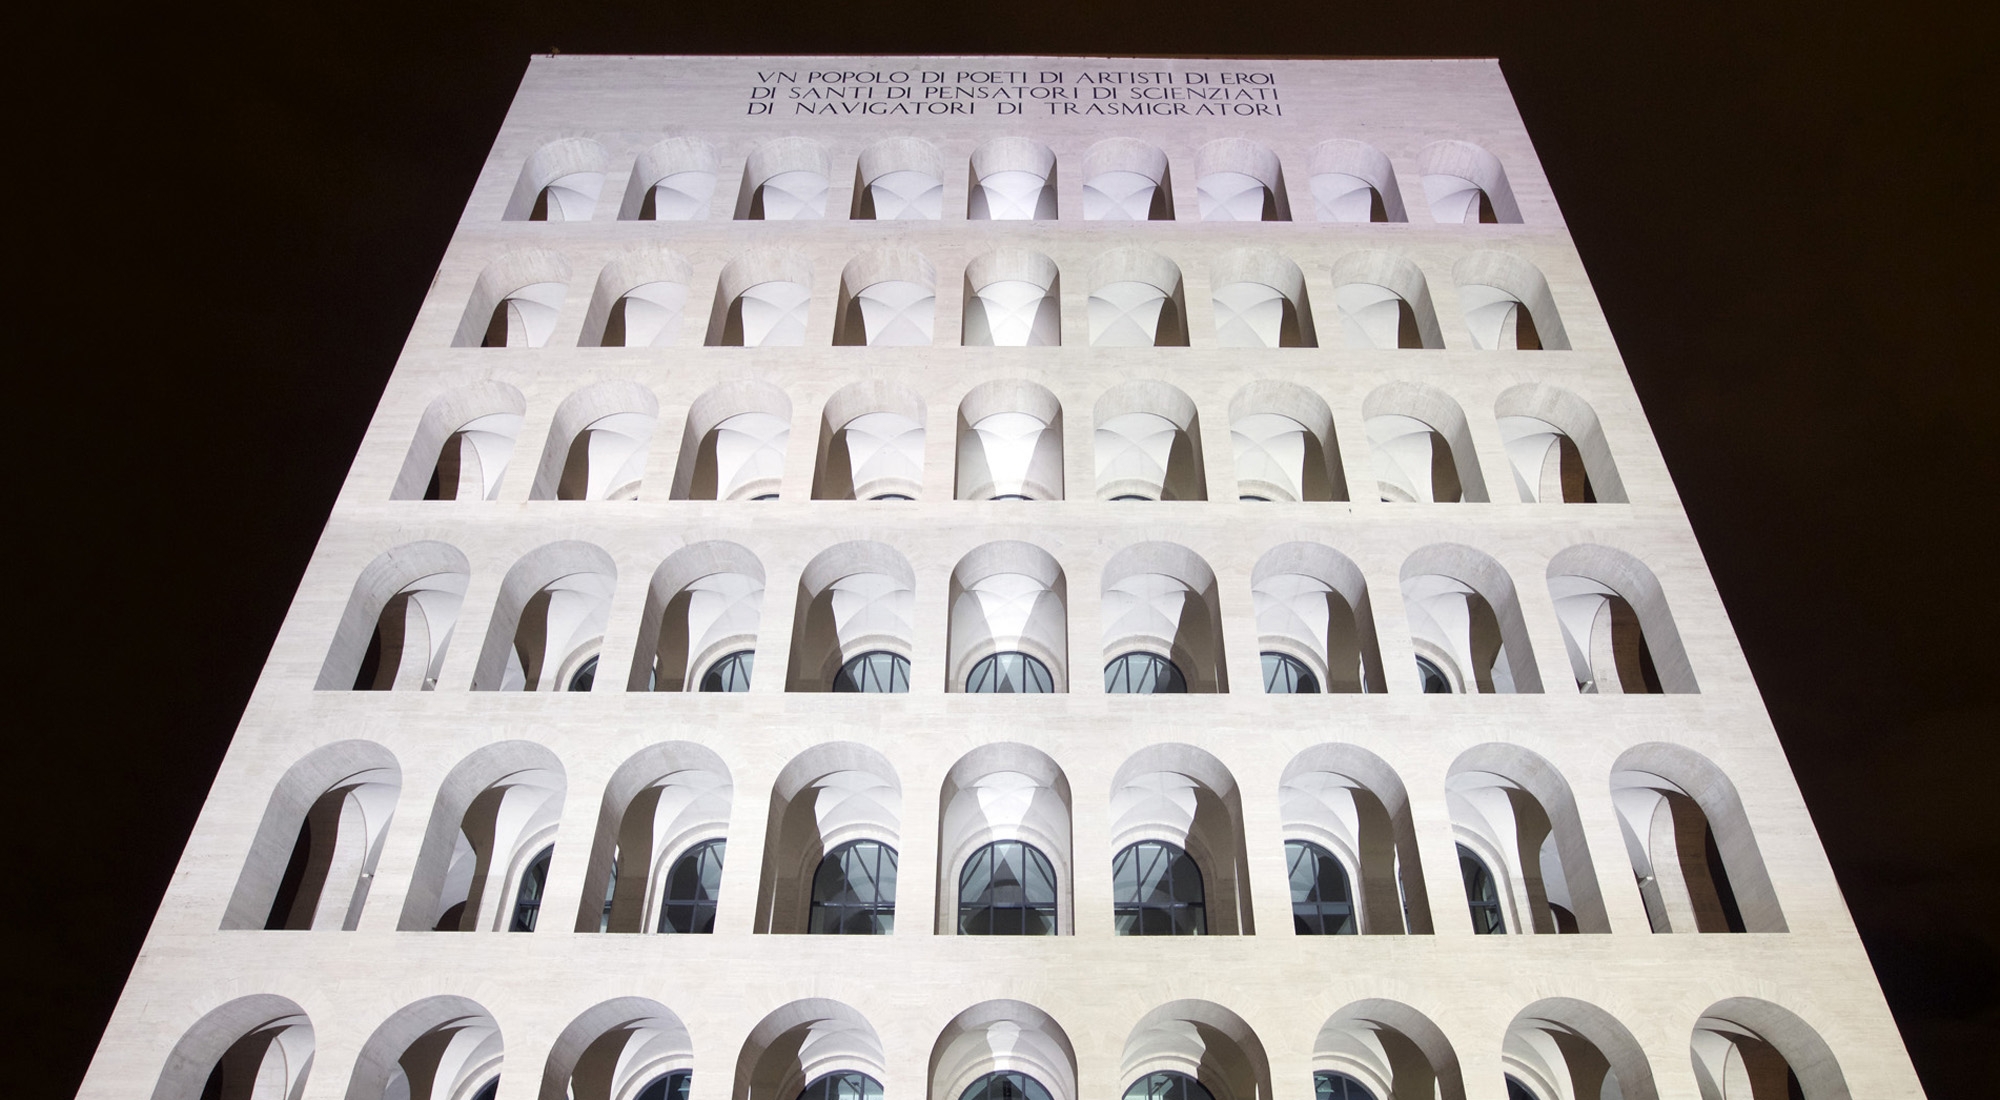 Fendi inaugurates new headquarters in Rome - LVMH